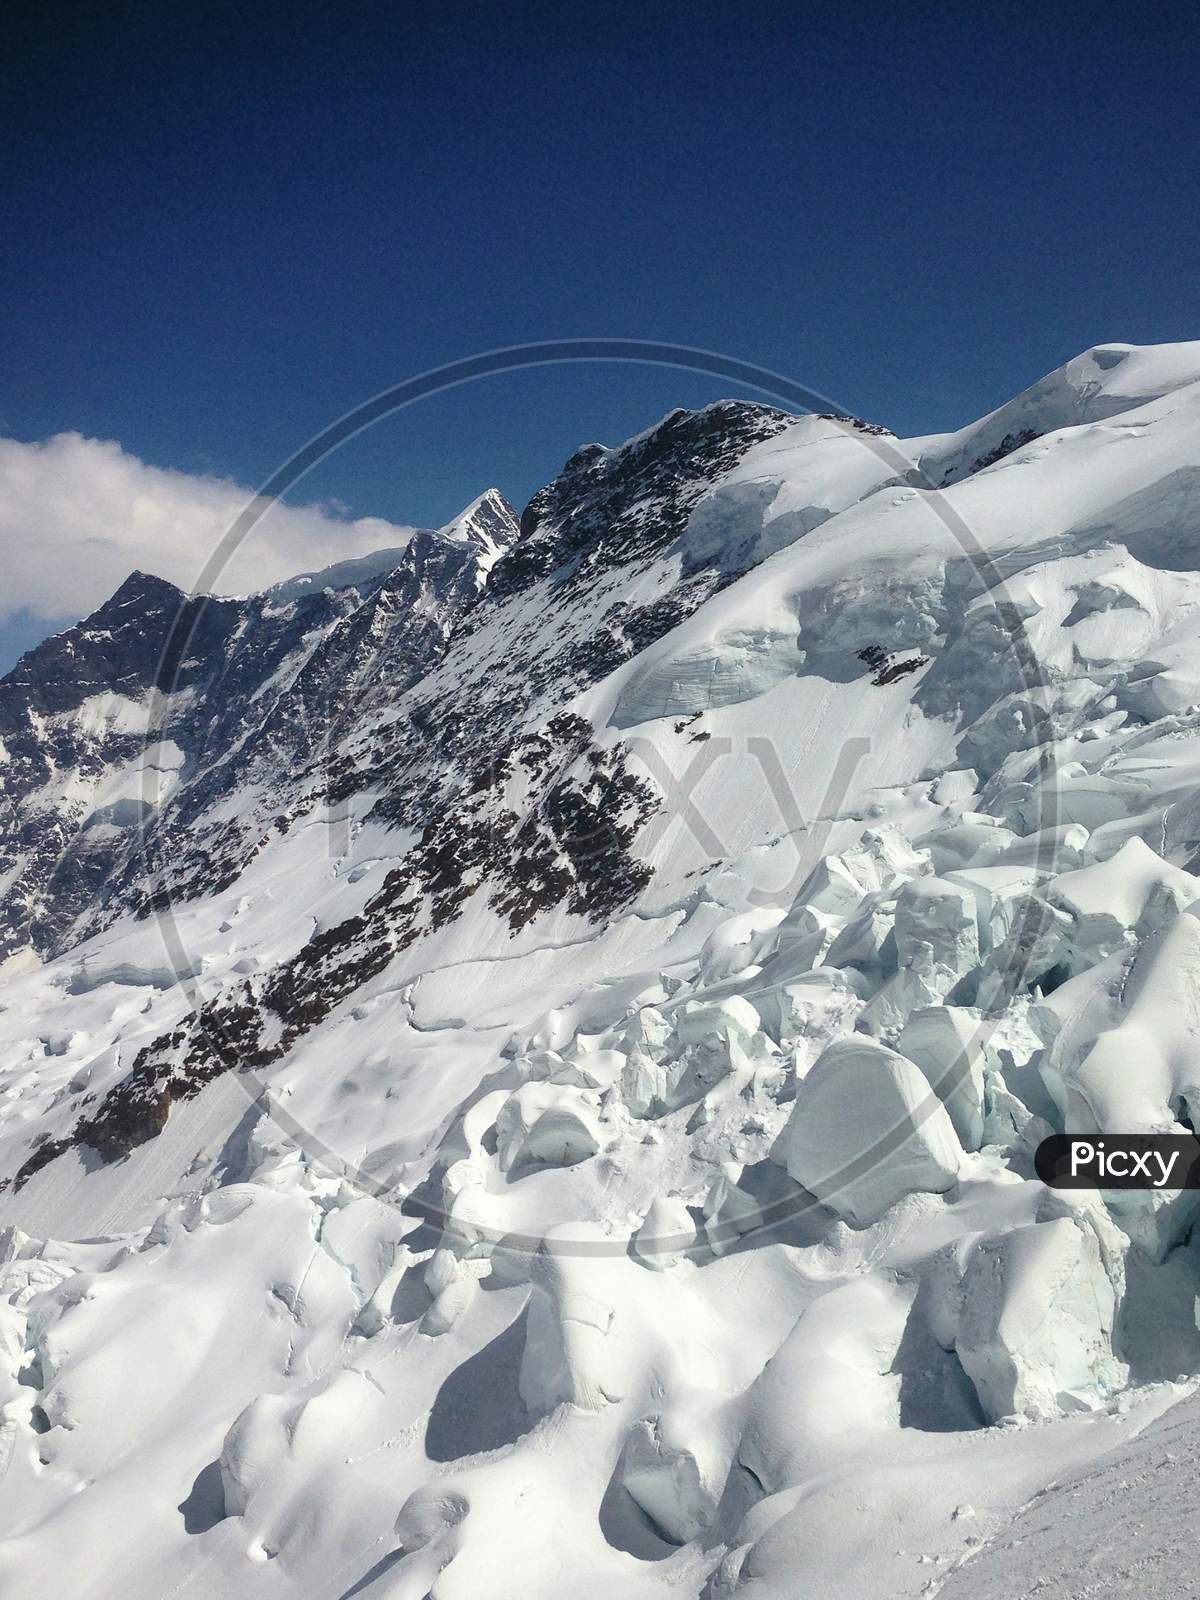 Top of the Jungfraujoch in Switzerland 5.6.2015